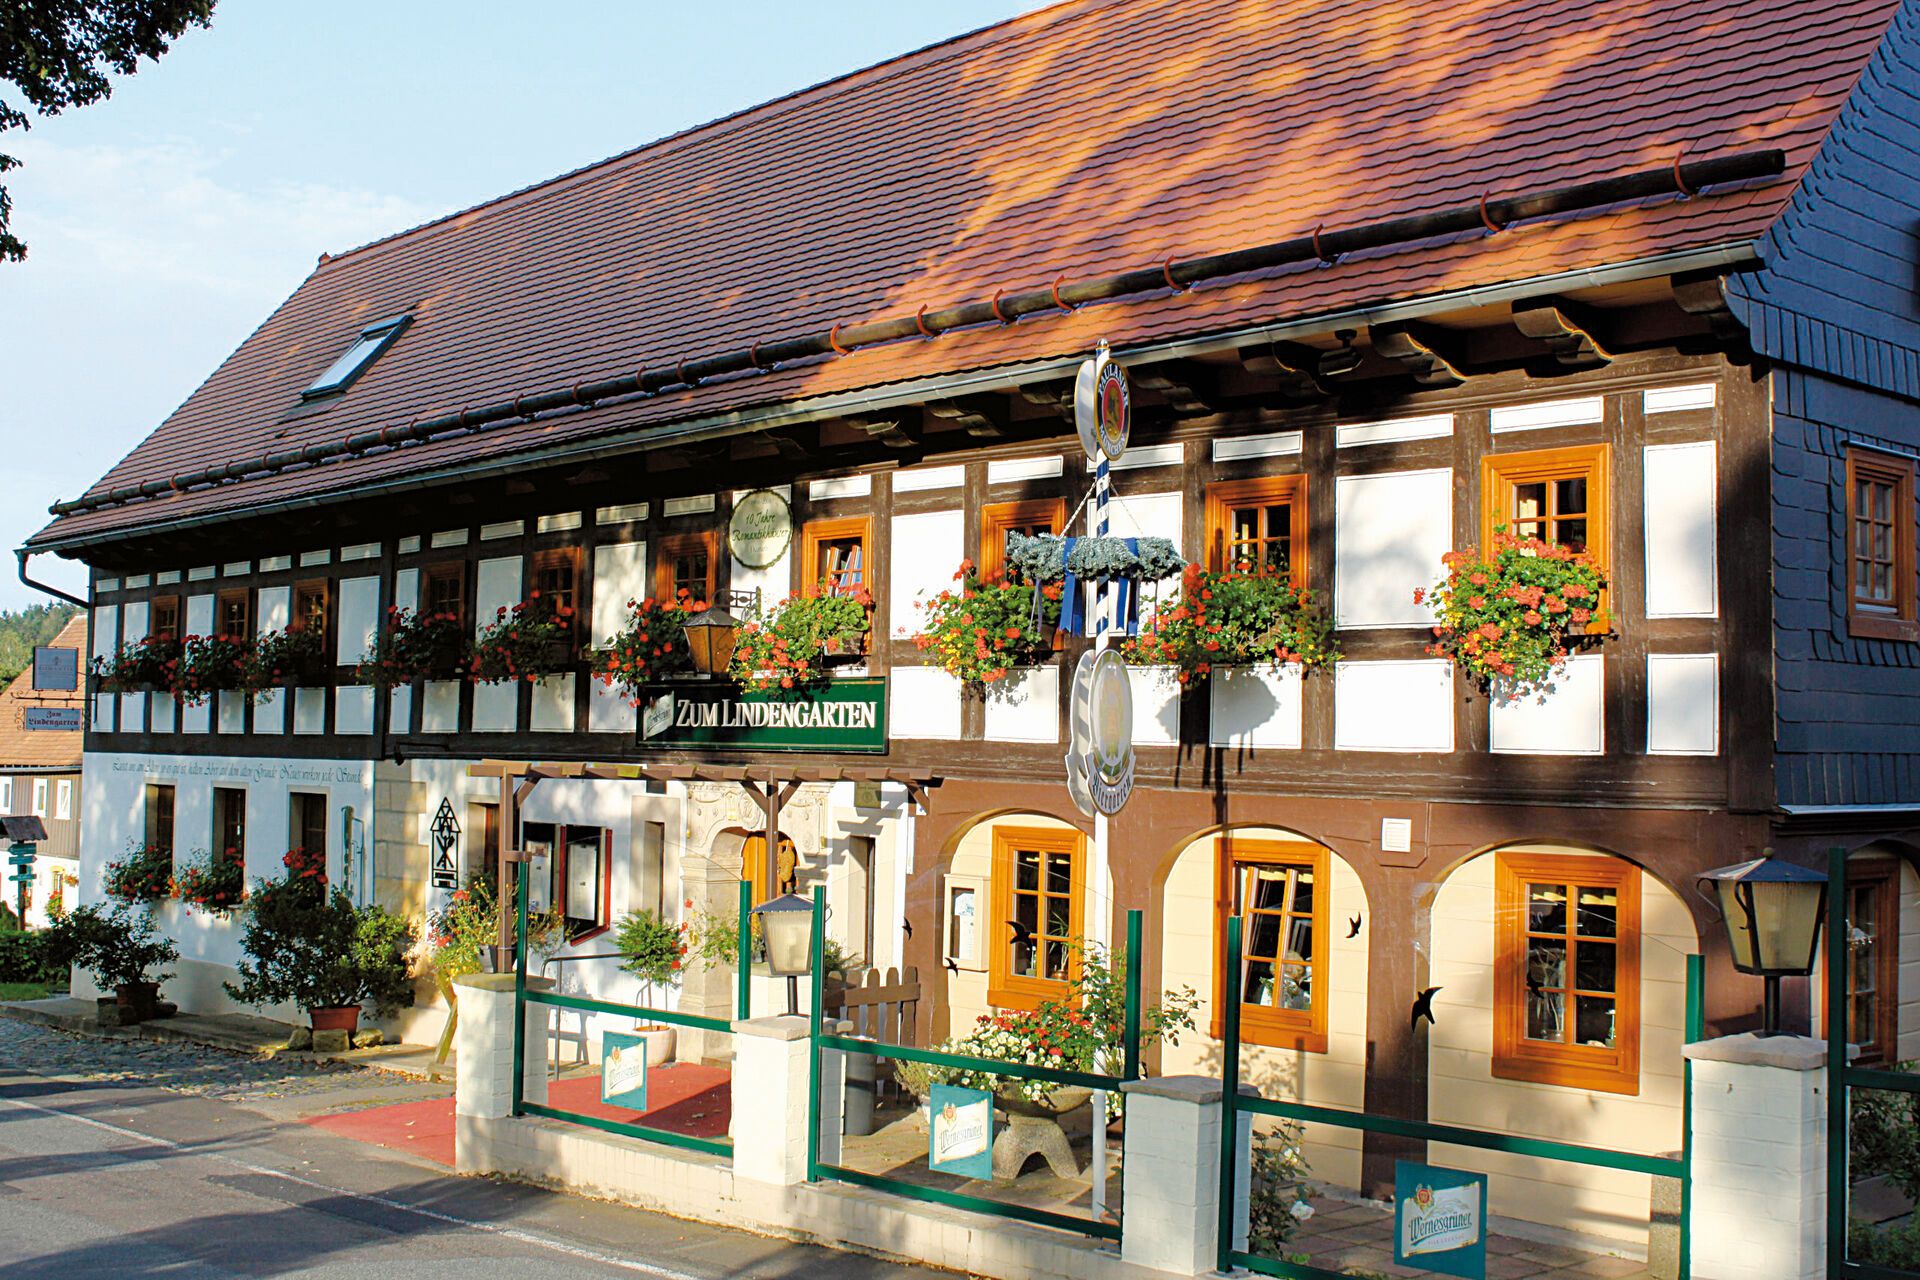 Romantik Hotel Zum Lindengarten